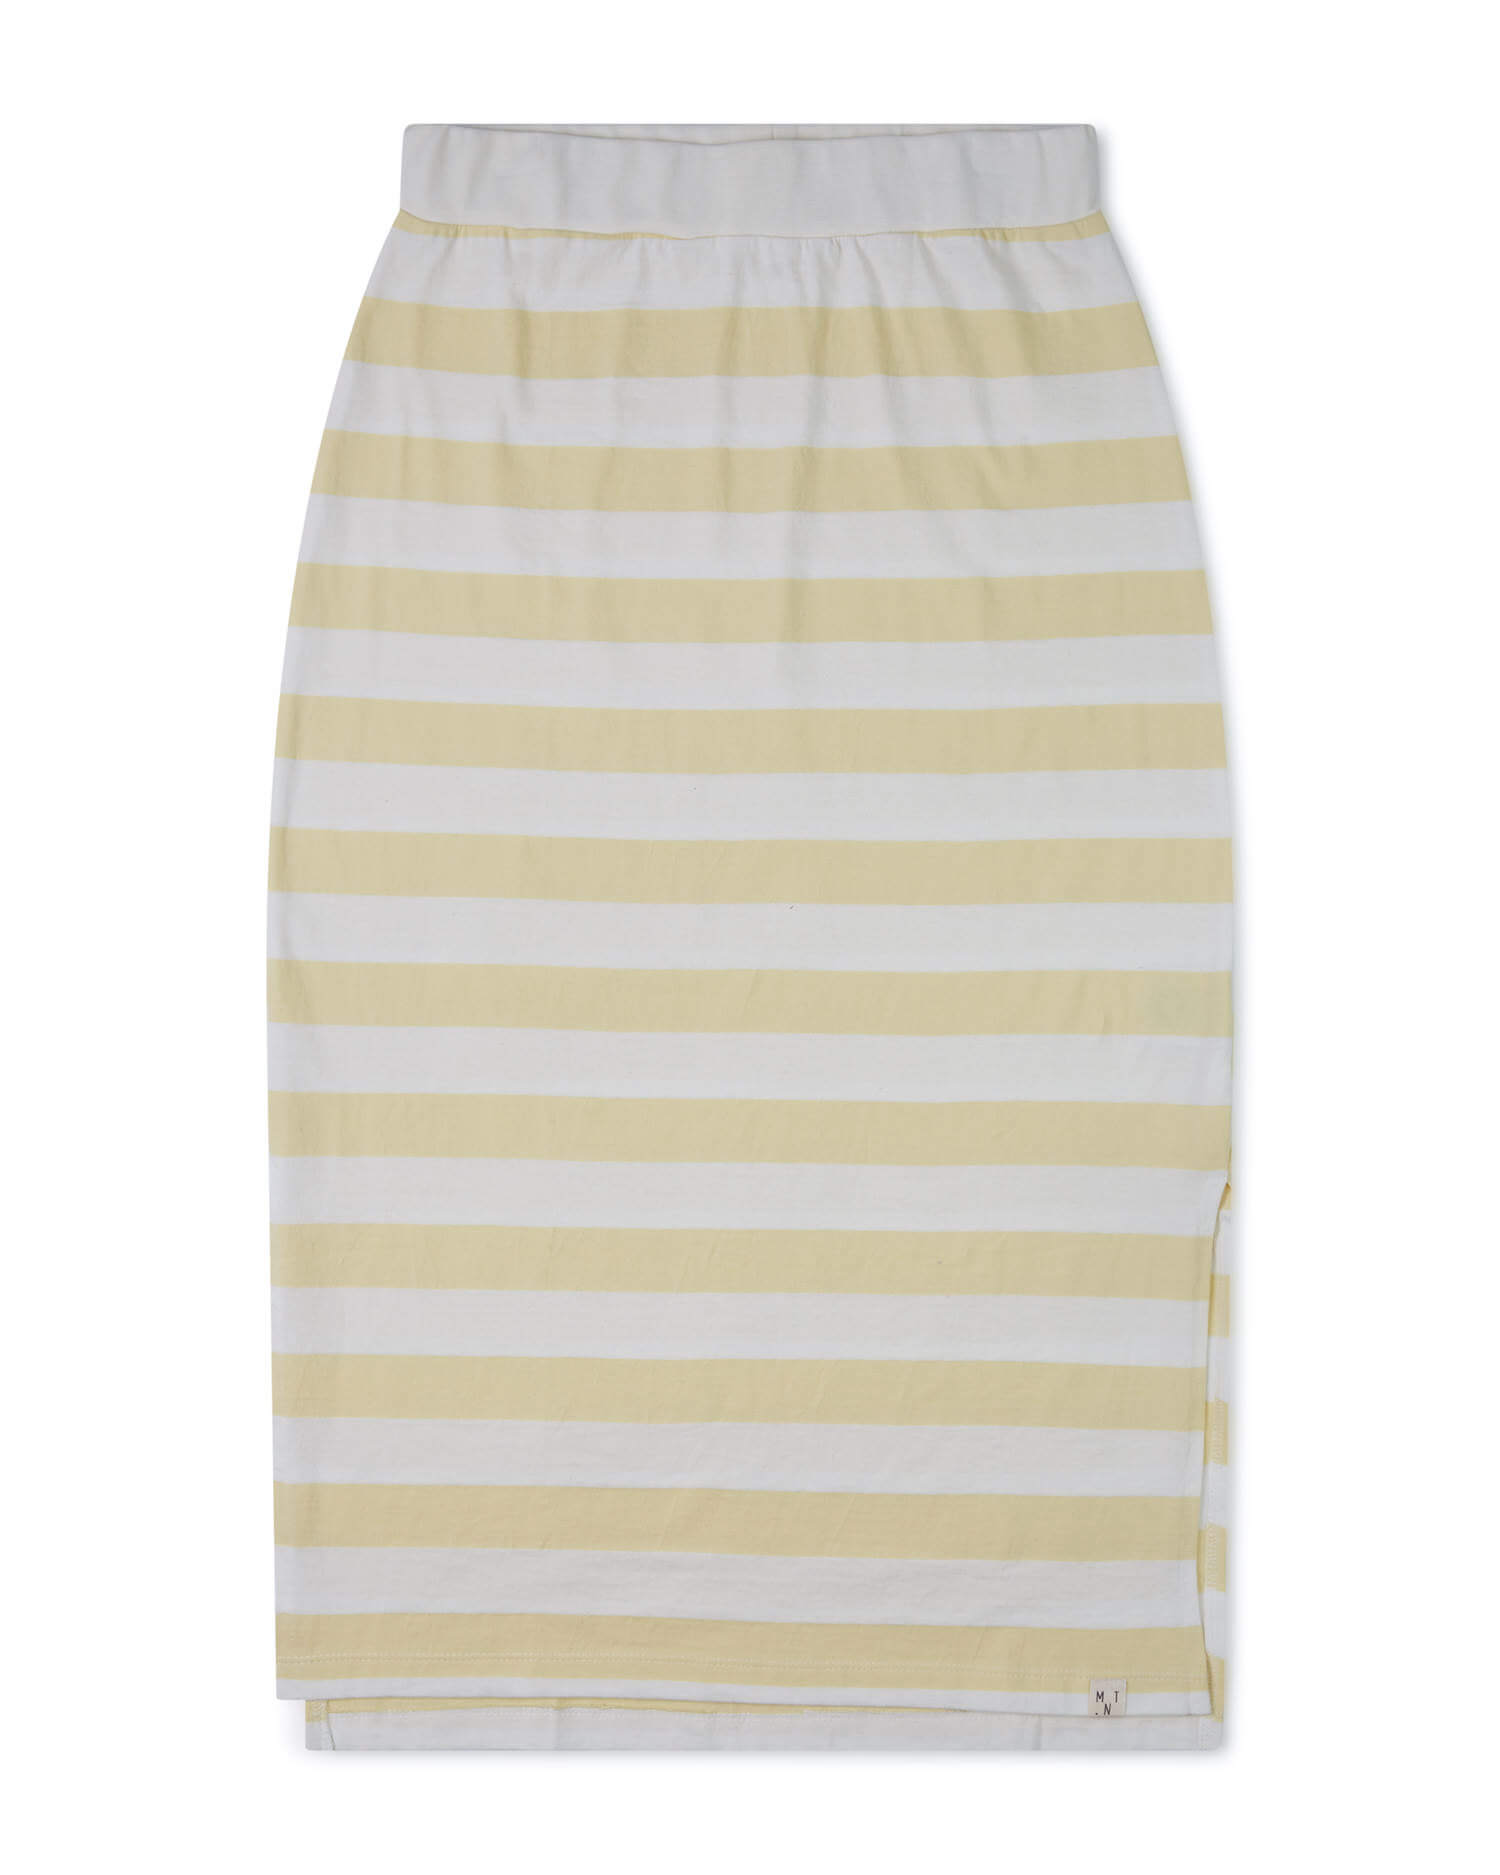 Yellow and white striped skirt made of 100% organic cotton from Matona